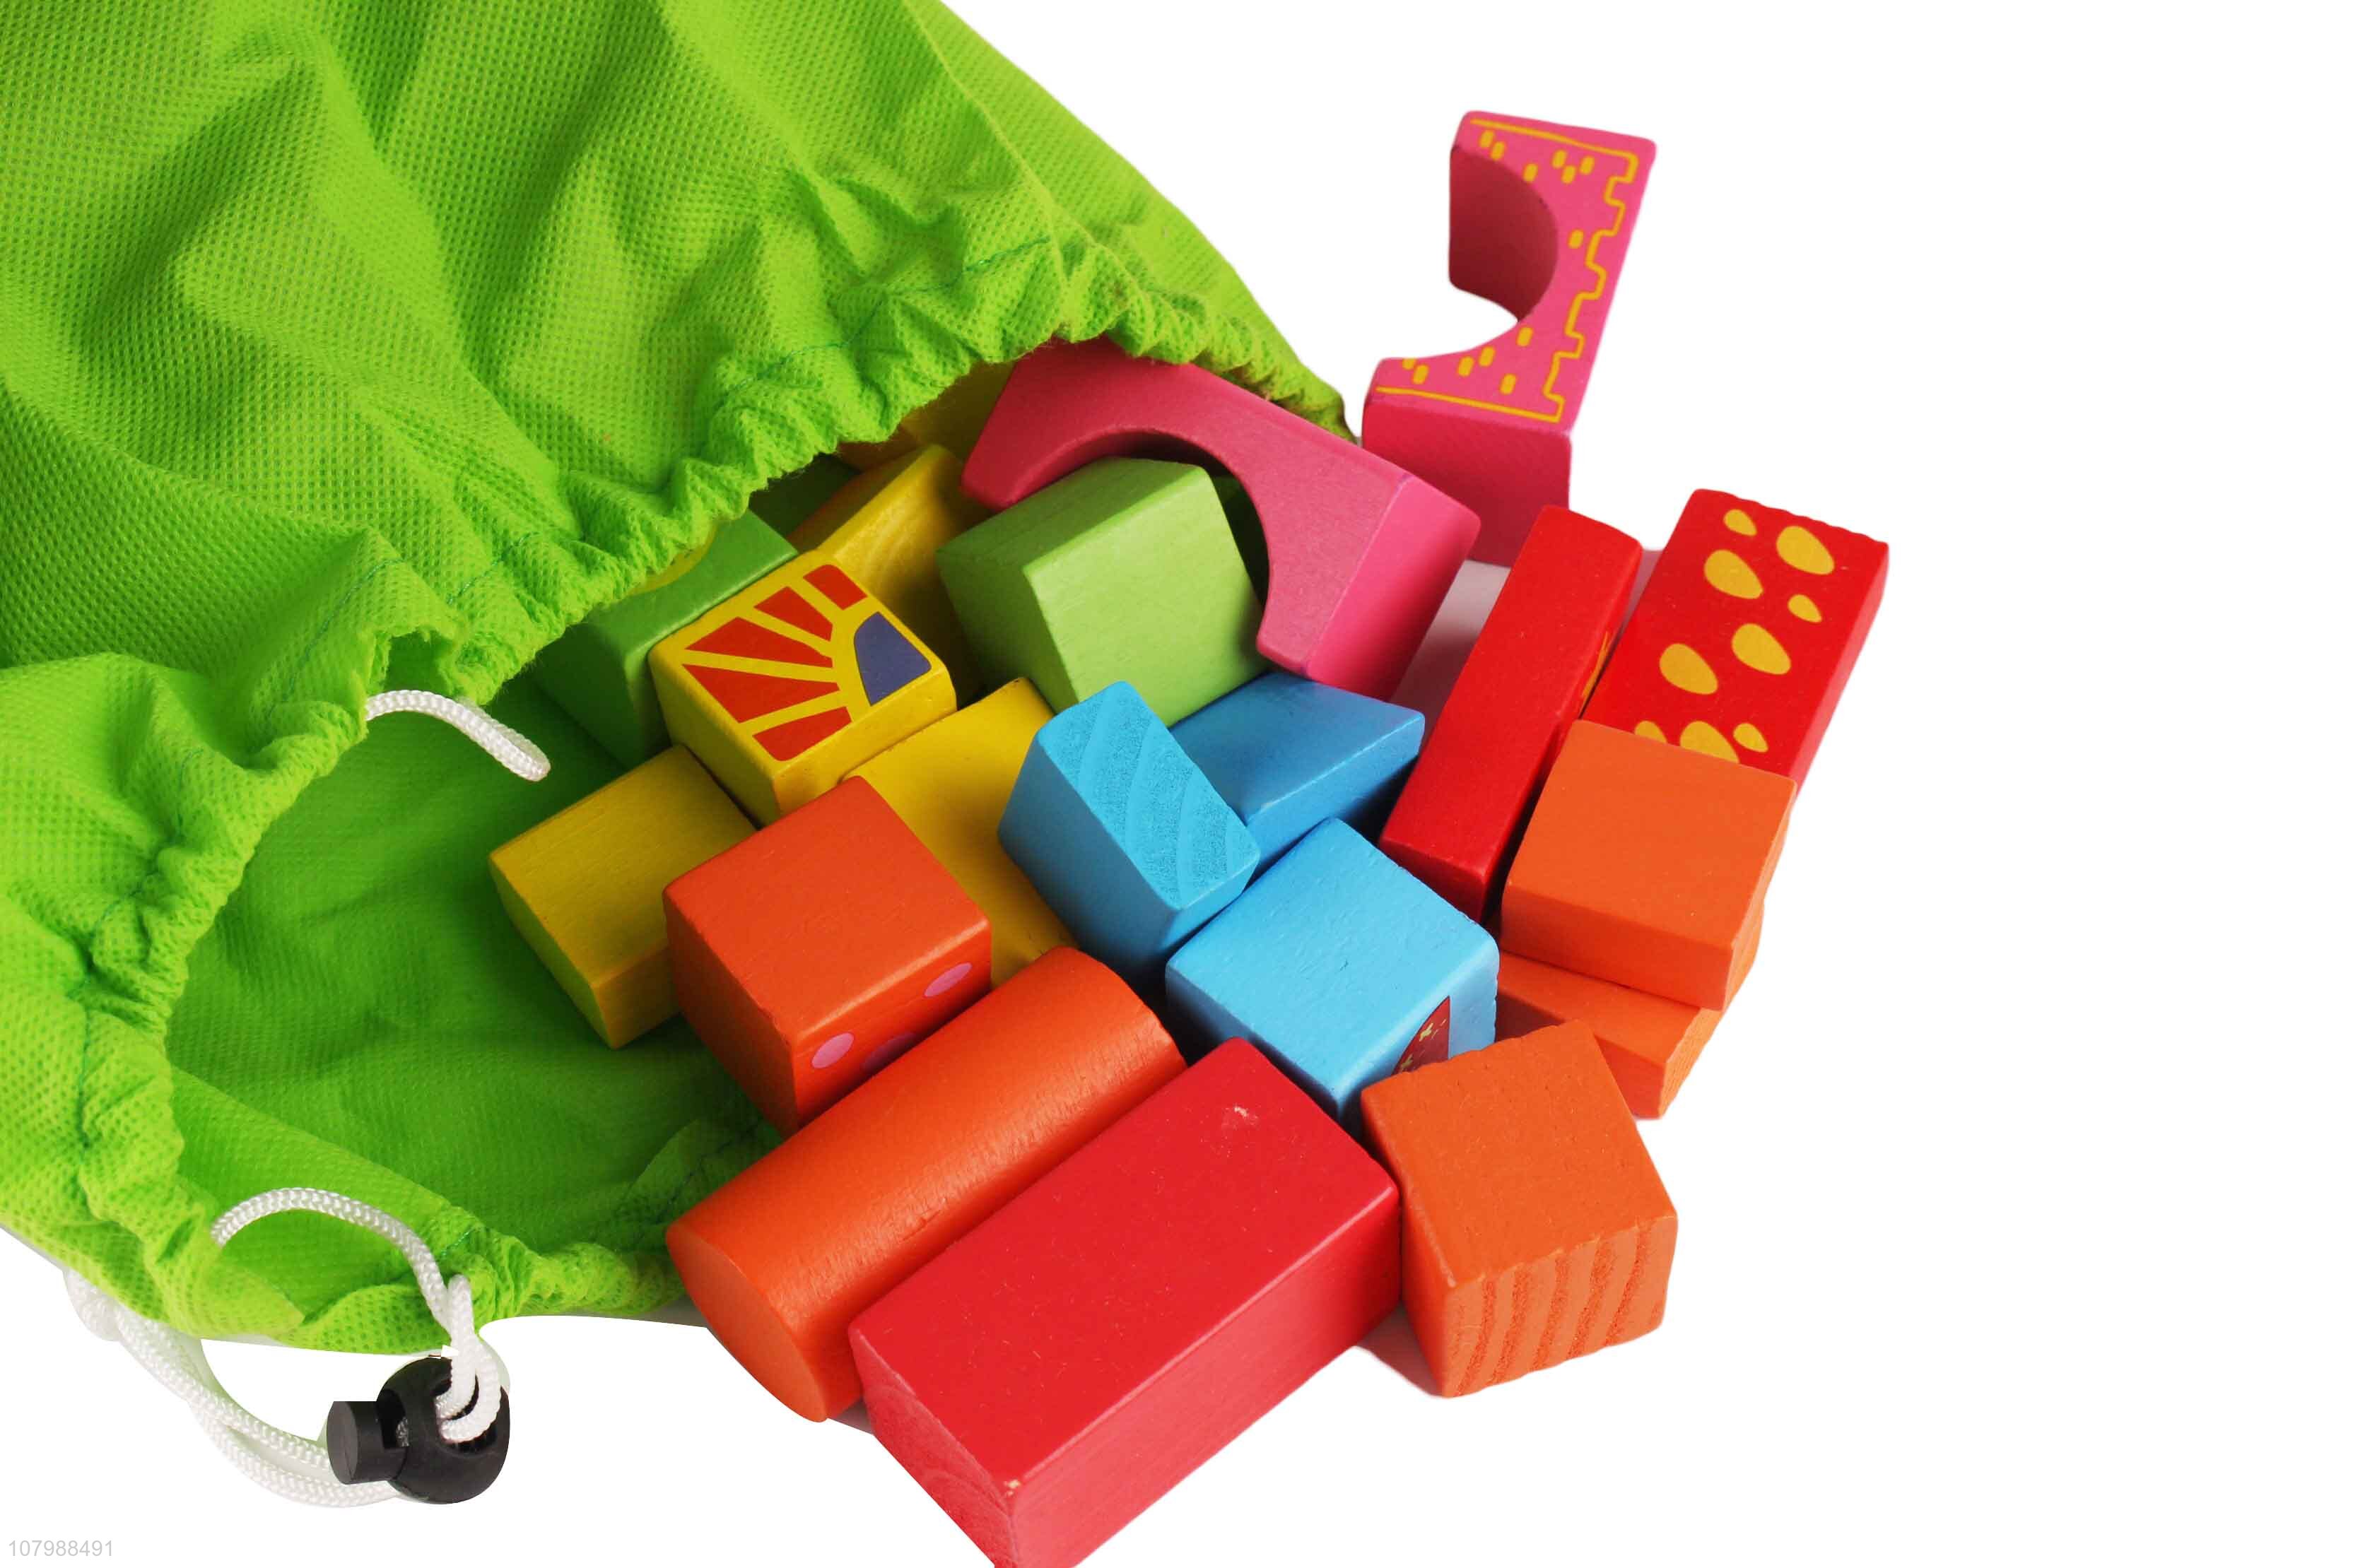 Online wholesale digital printed building blocks toys for children